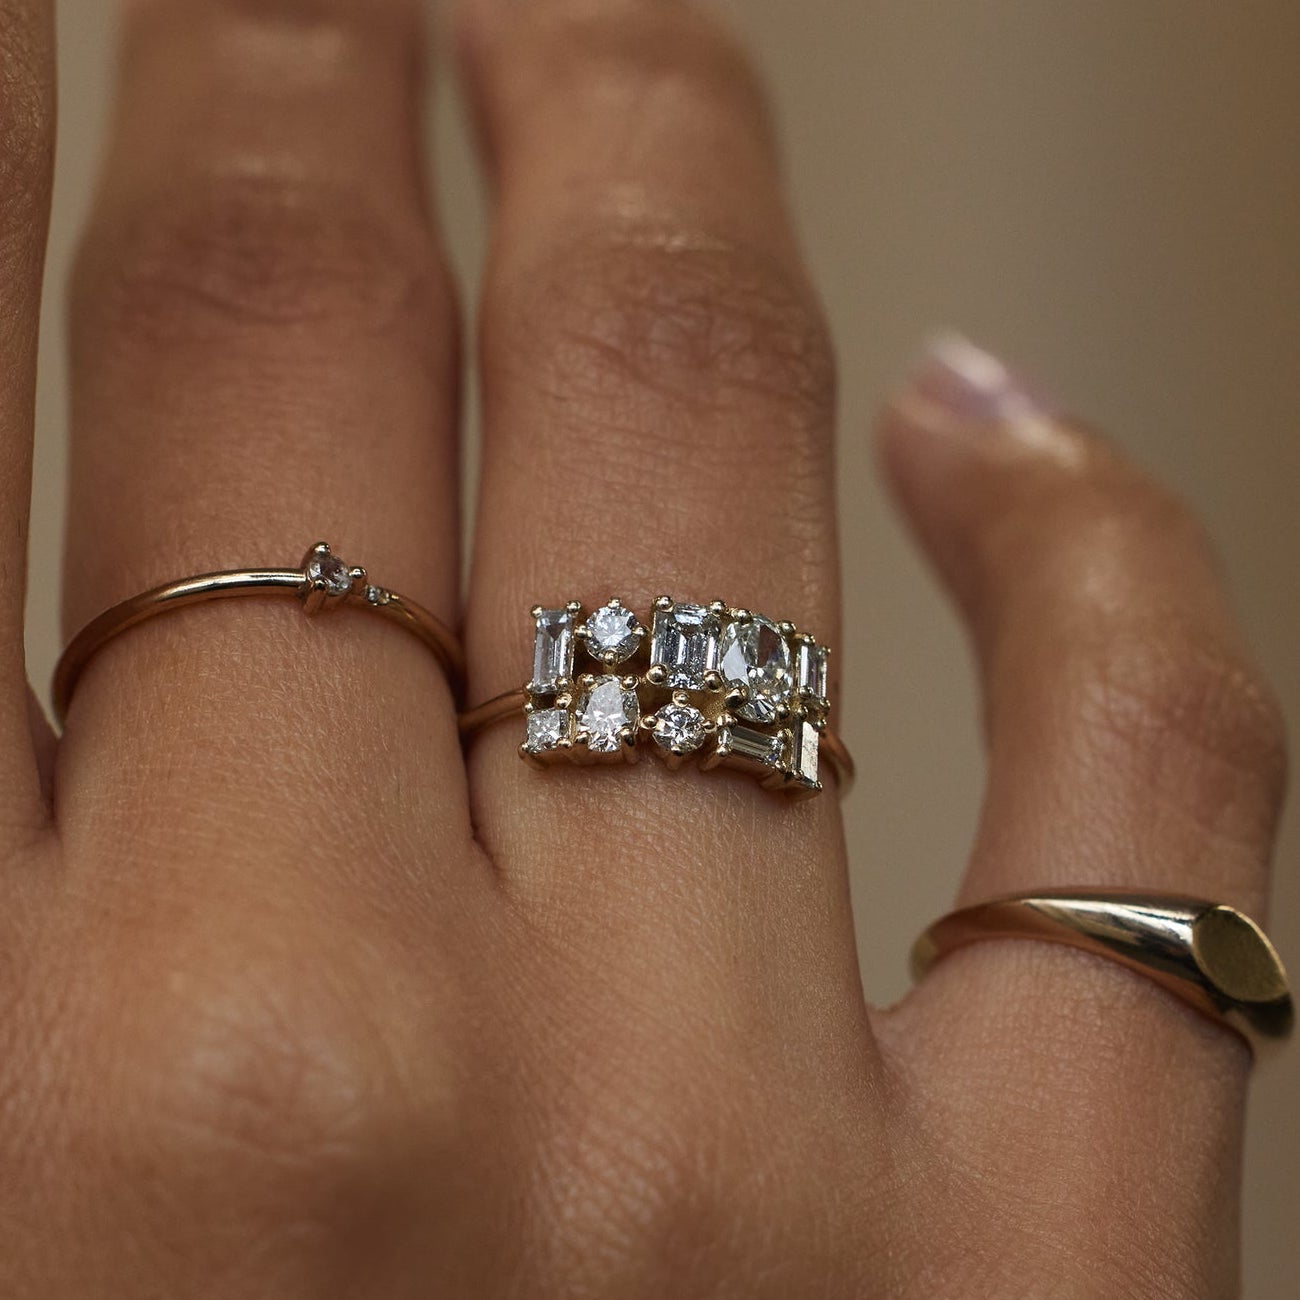 Buy Princess Platinum Ring Online in India | Kasturi Diamond